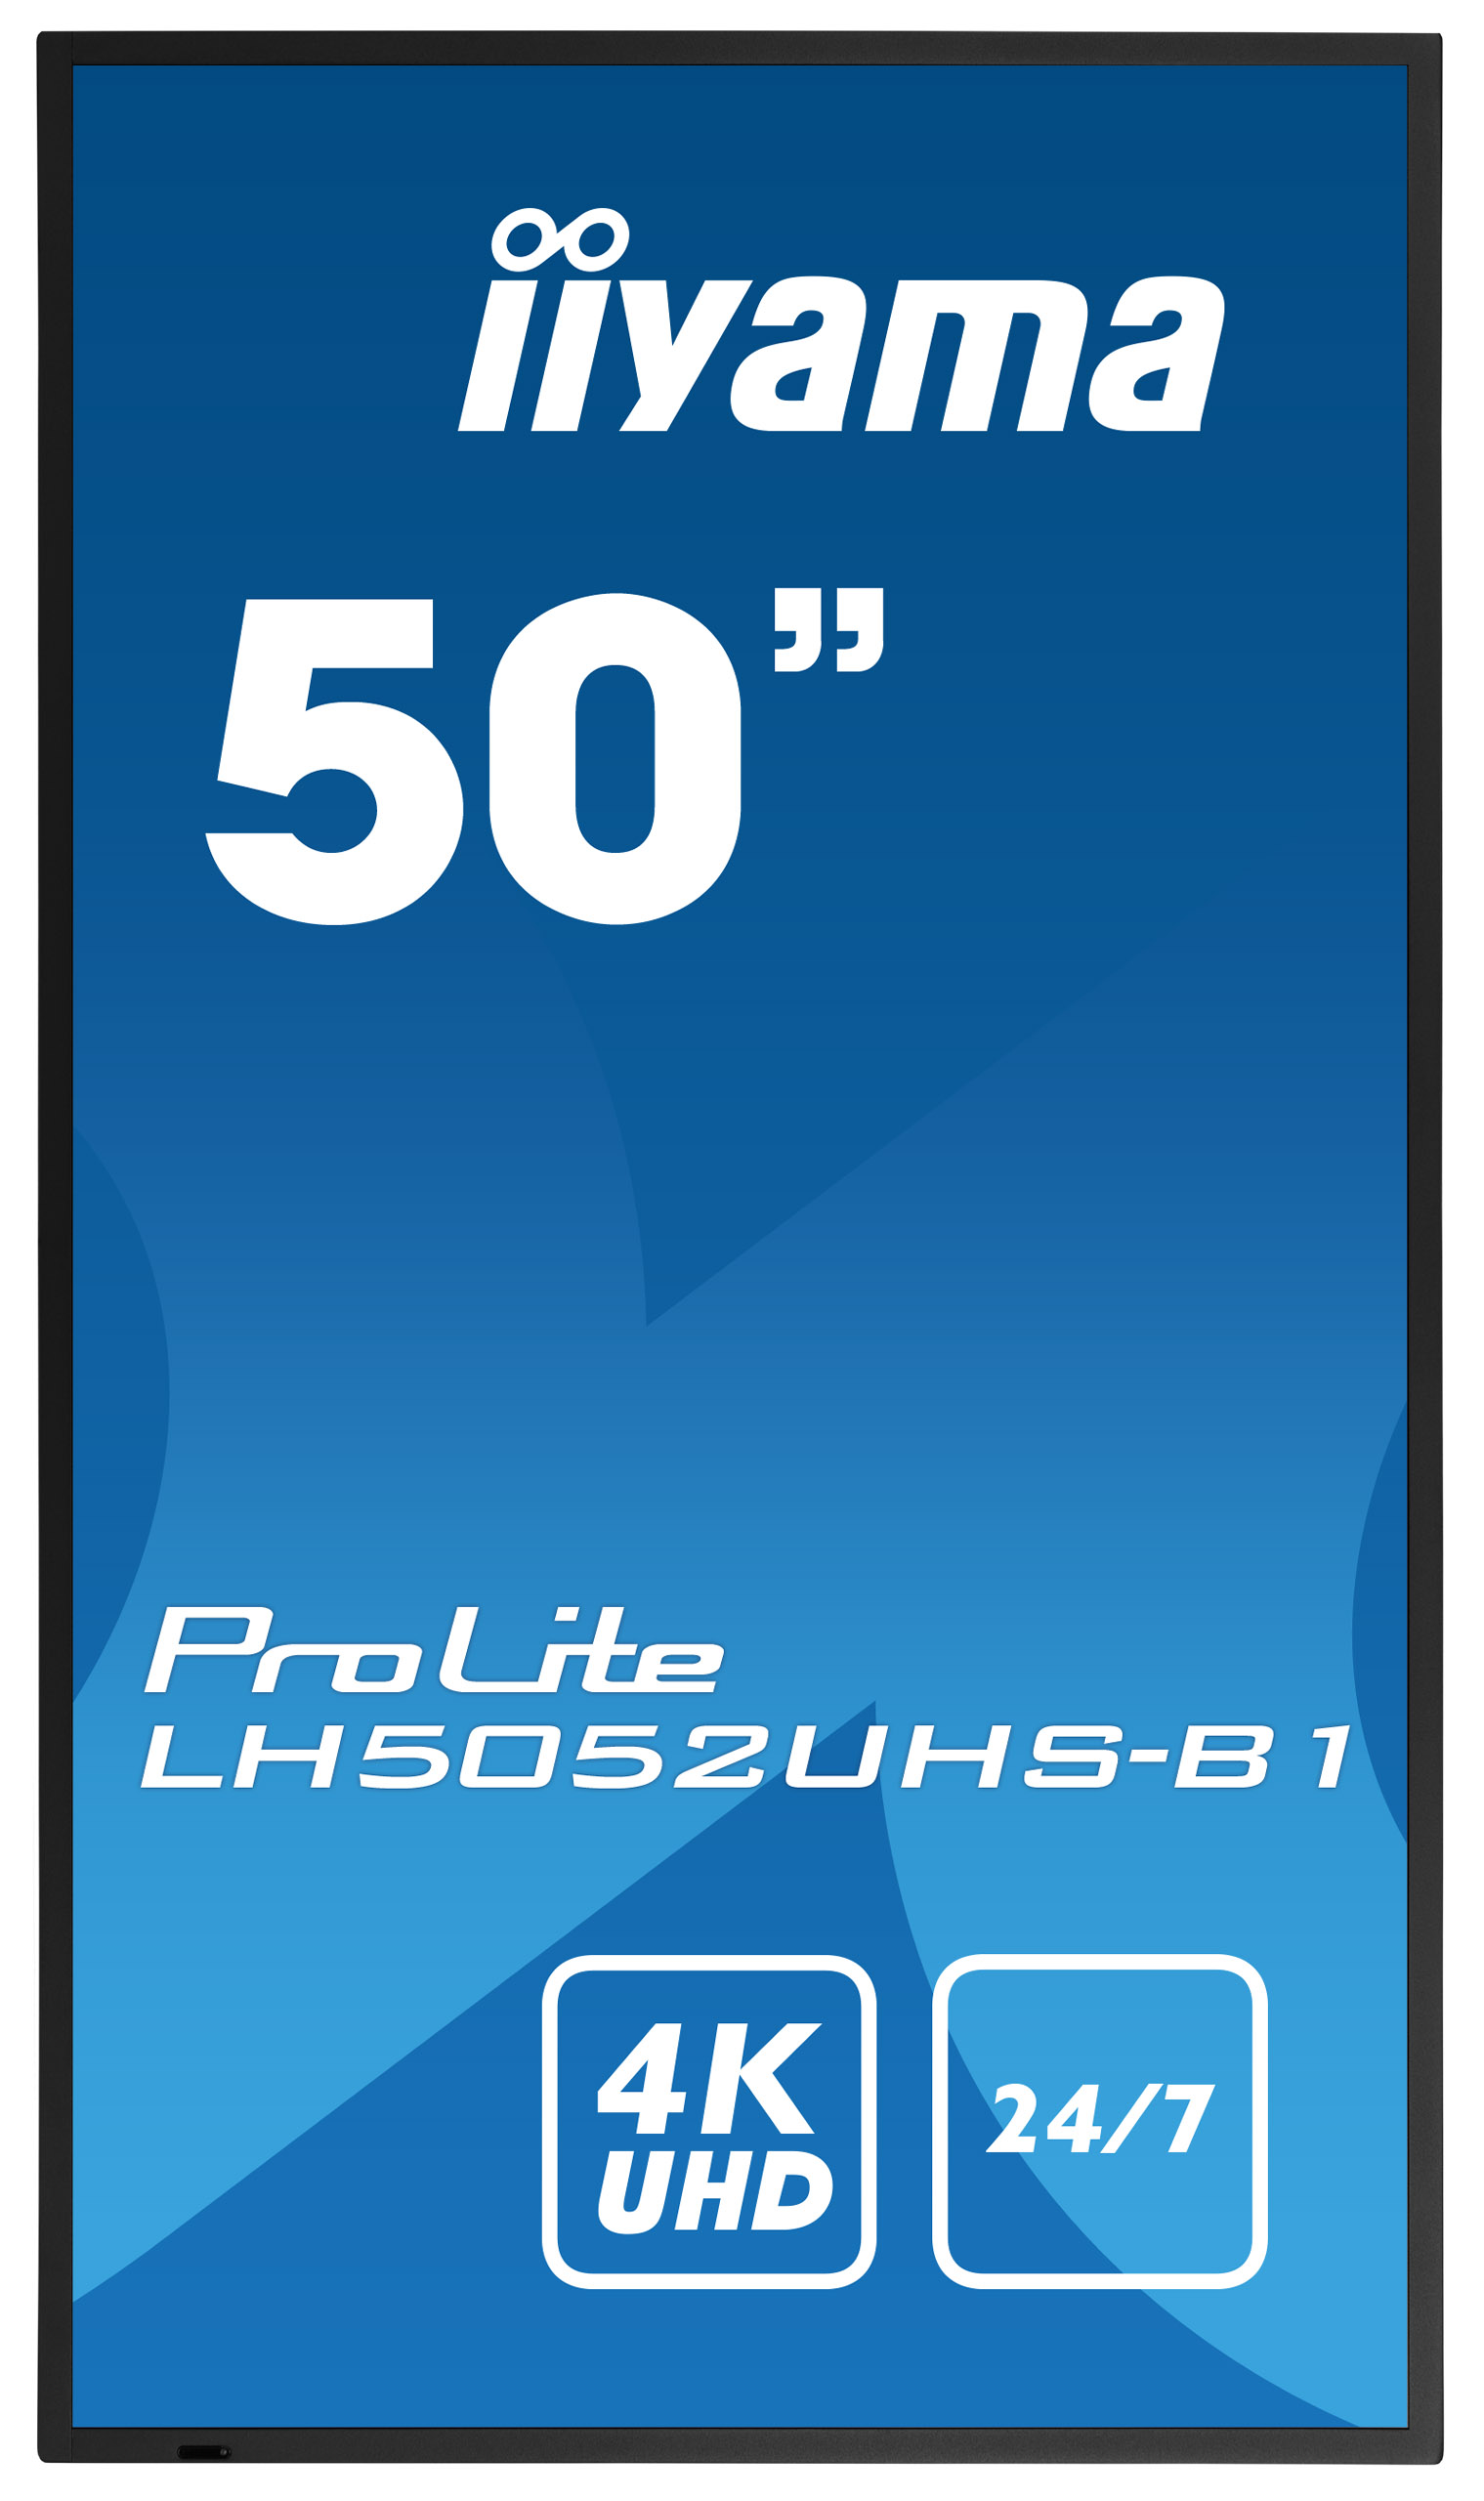 Iiyama ProLite LH5052UHS-B1 | 49,5" (125,7cm) | 24/7